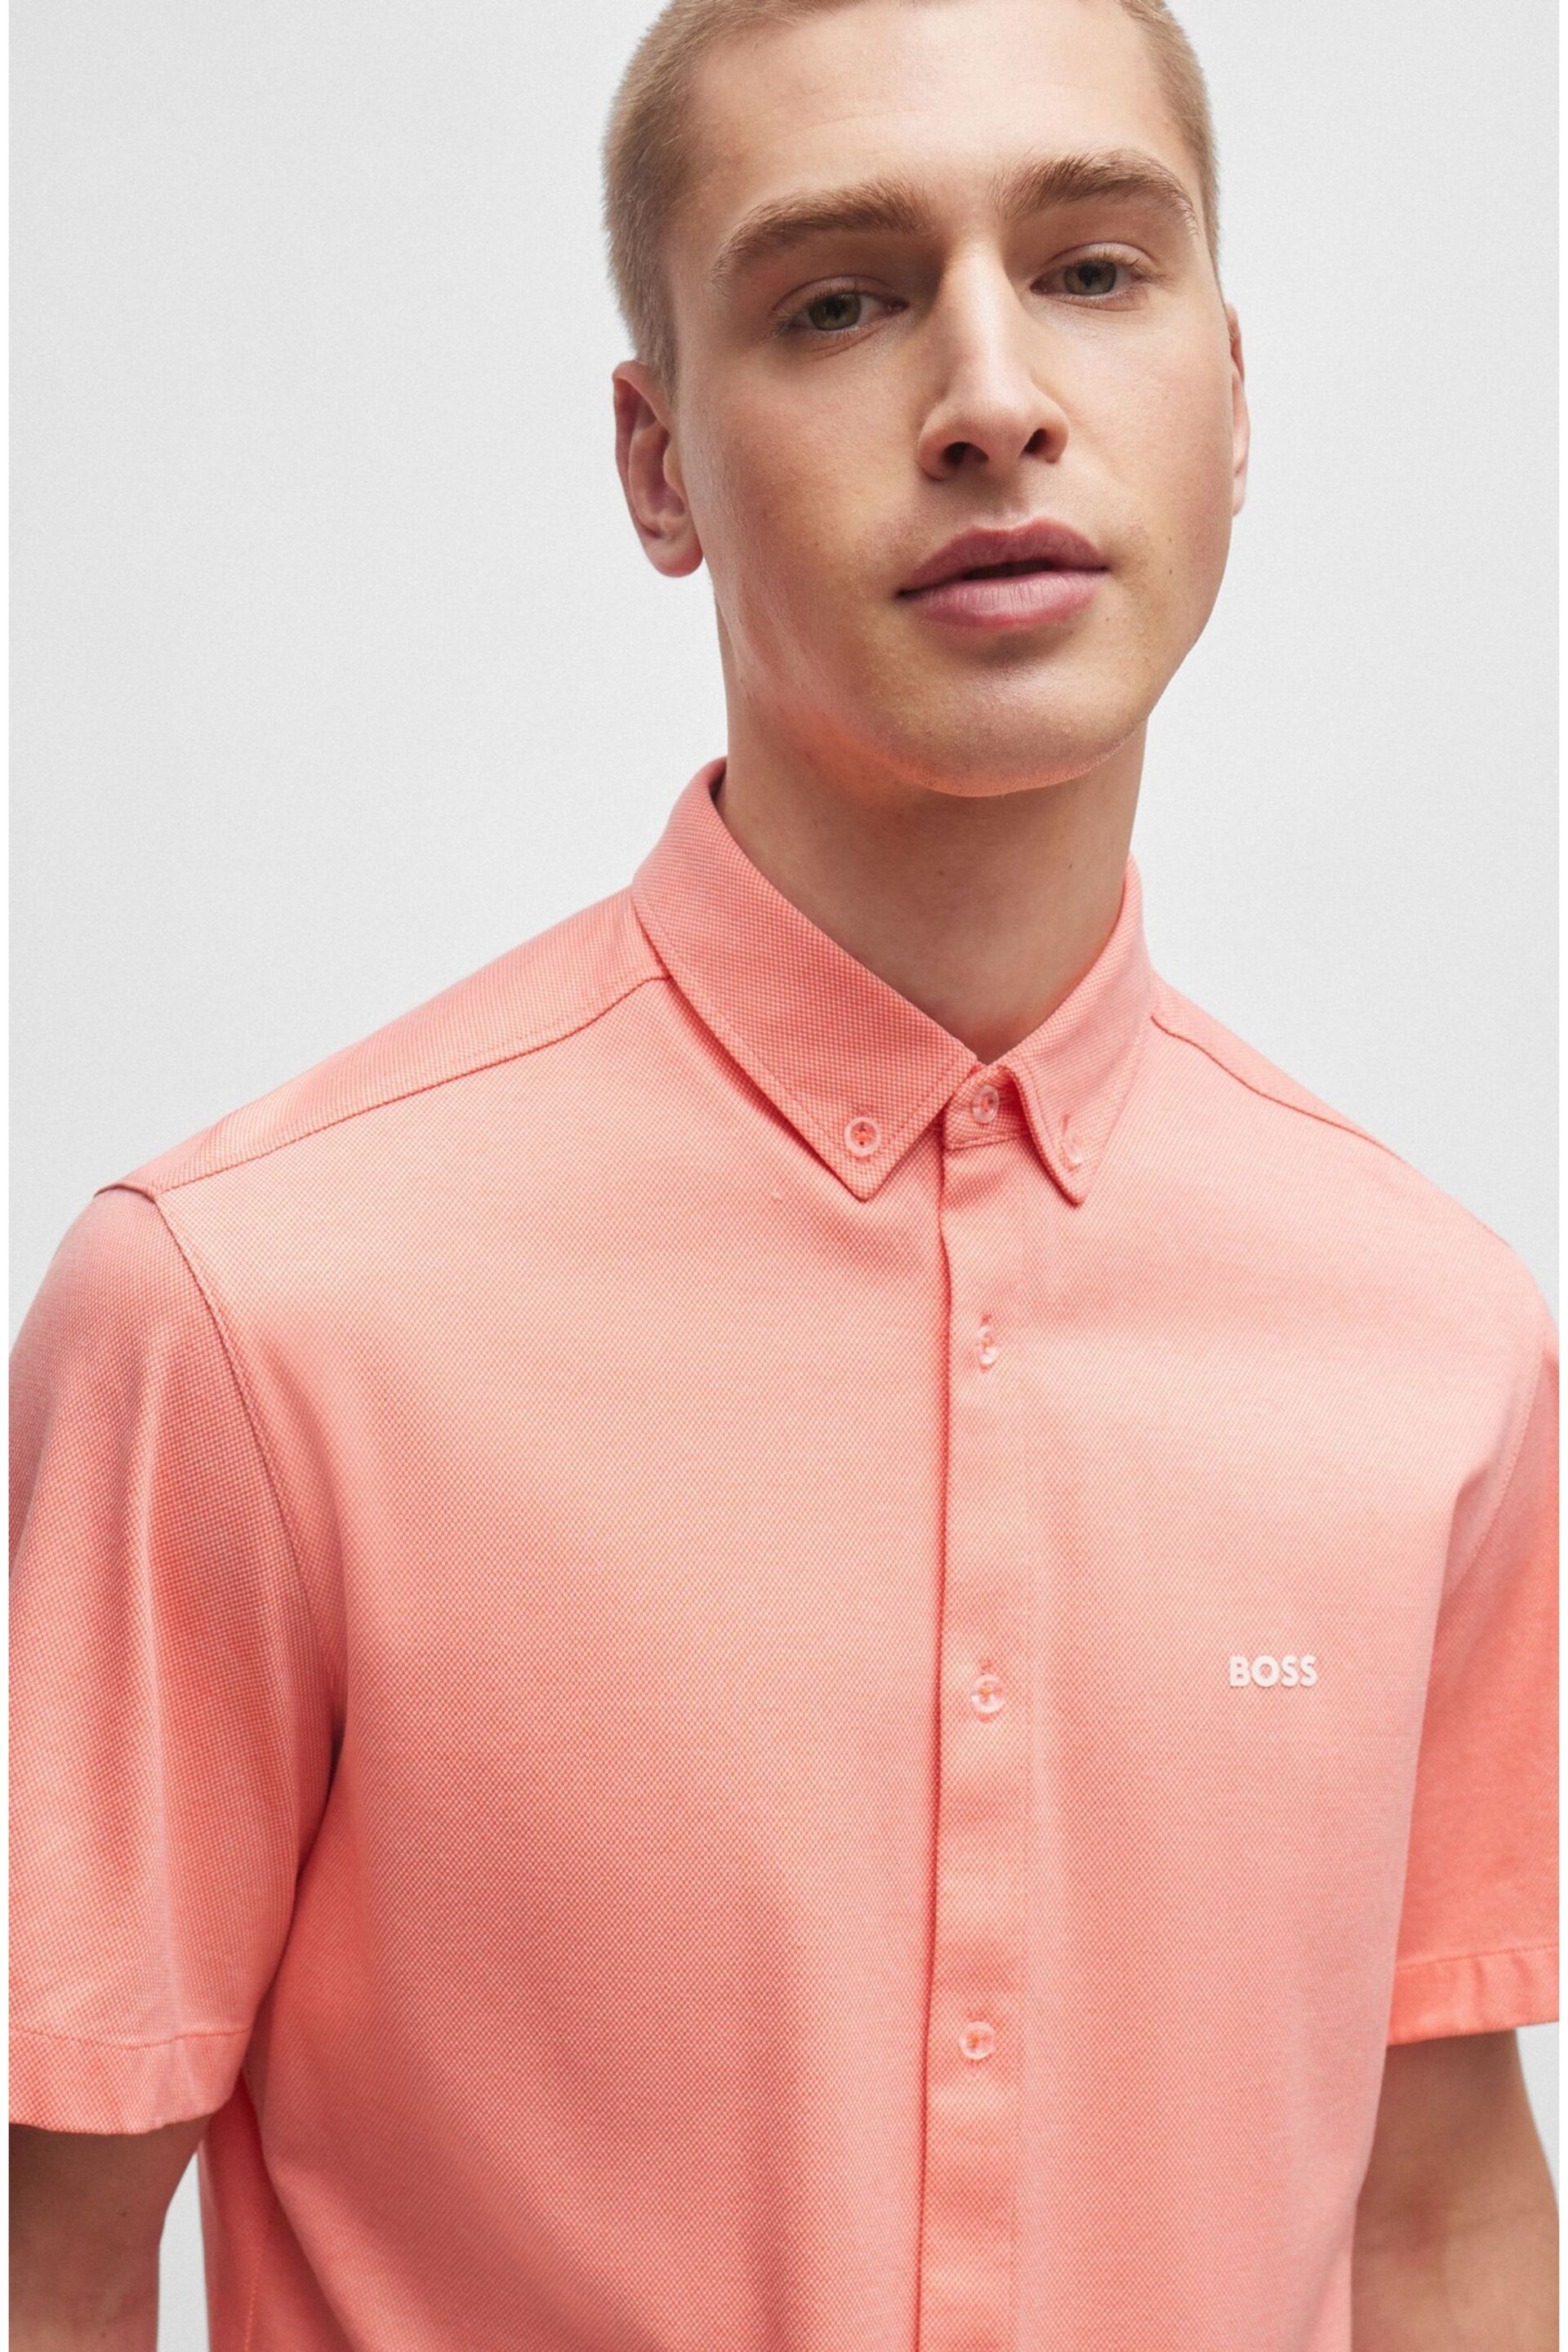 BOSS Pink Regular-Fit Shirt in Cotton Piqué Jersey - Image 5 of 6